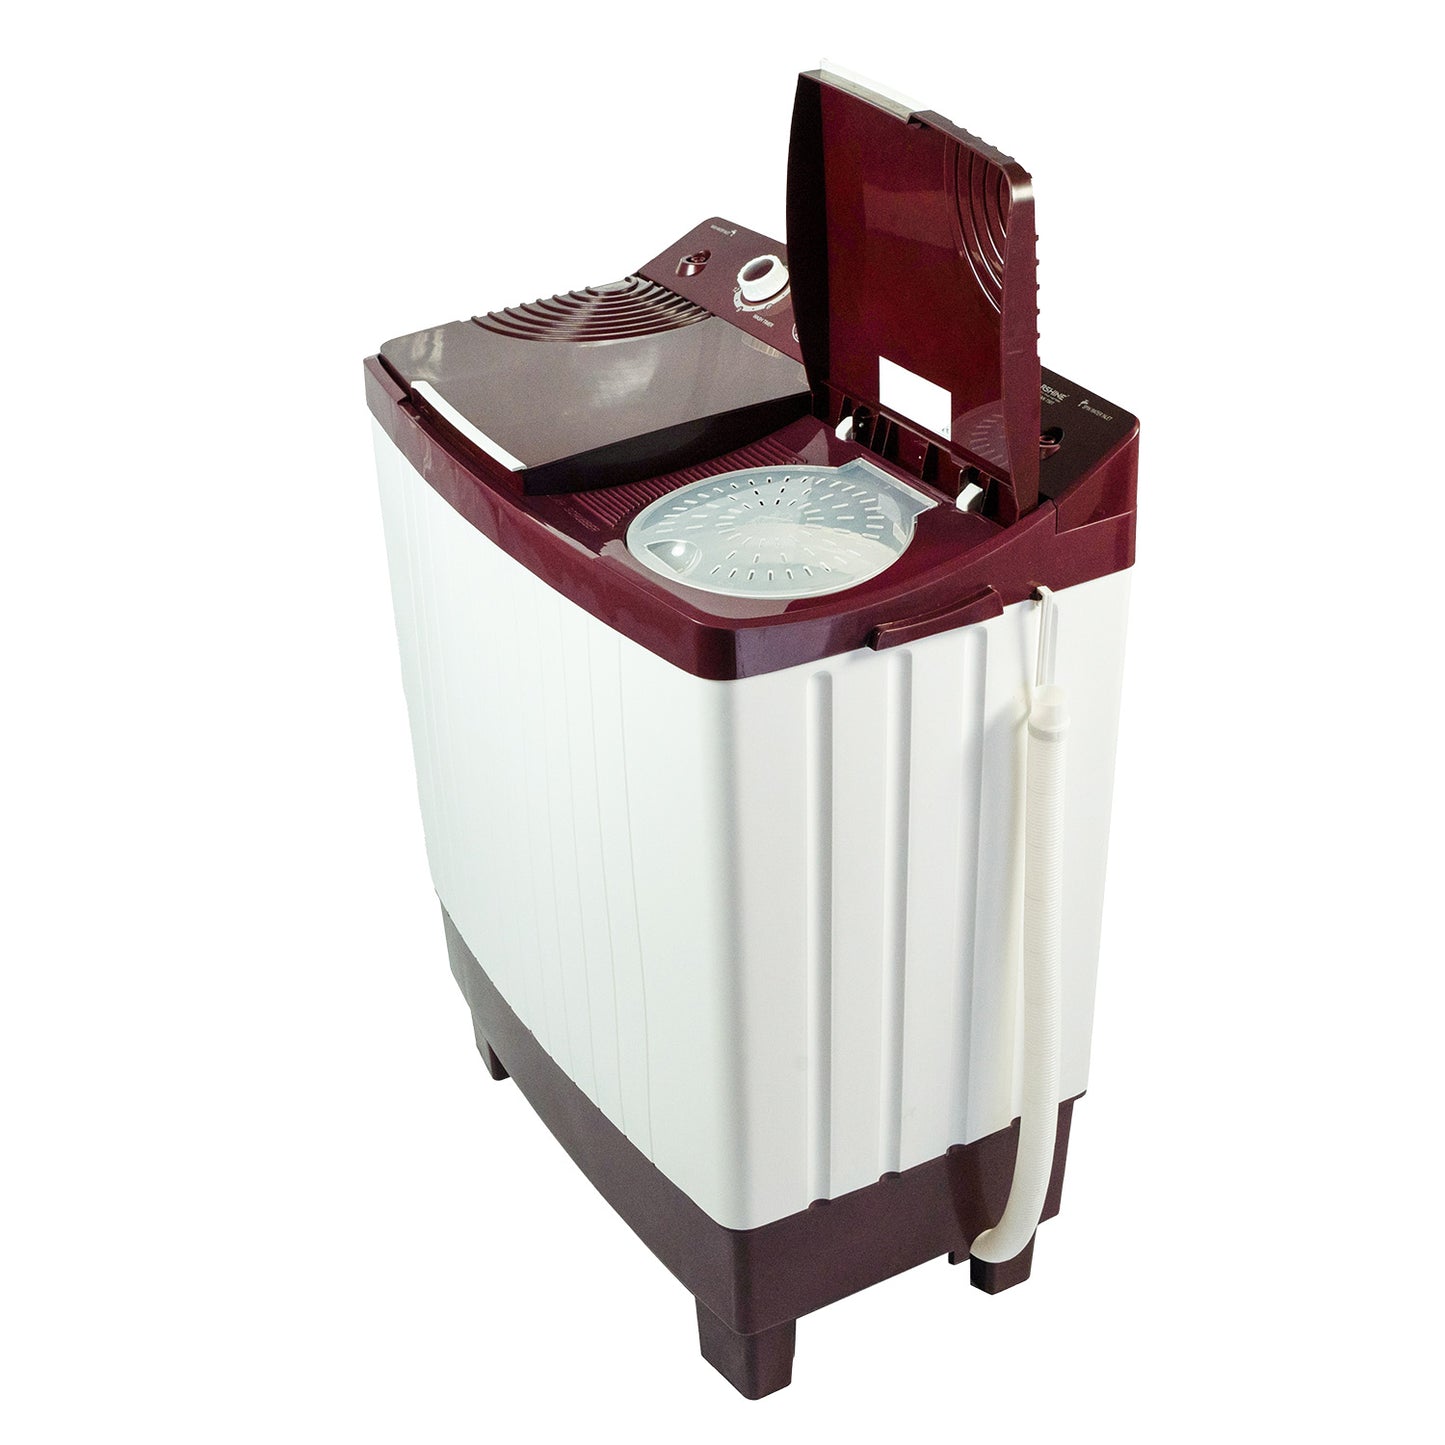 Starshine 7.2 Kg Semi-Automatic Top Loading Washing Machine